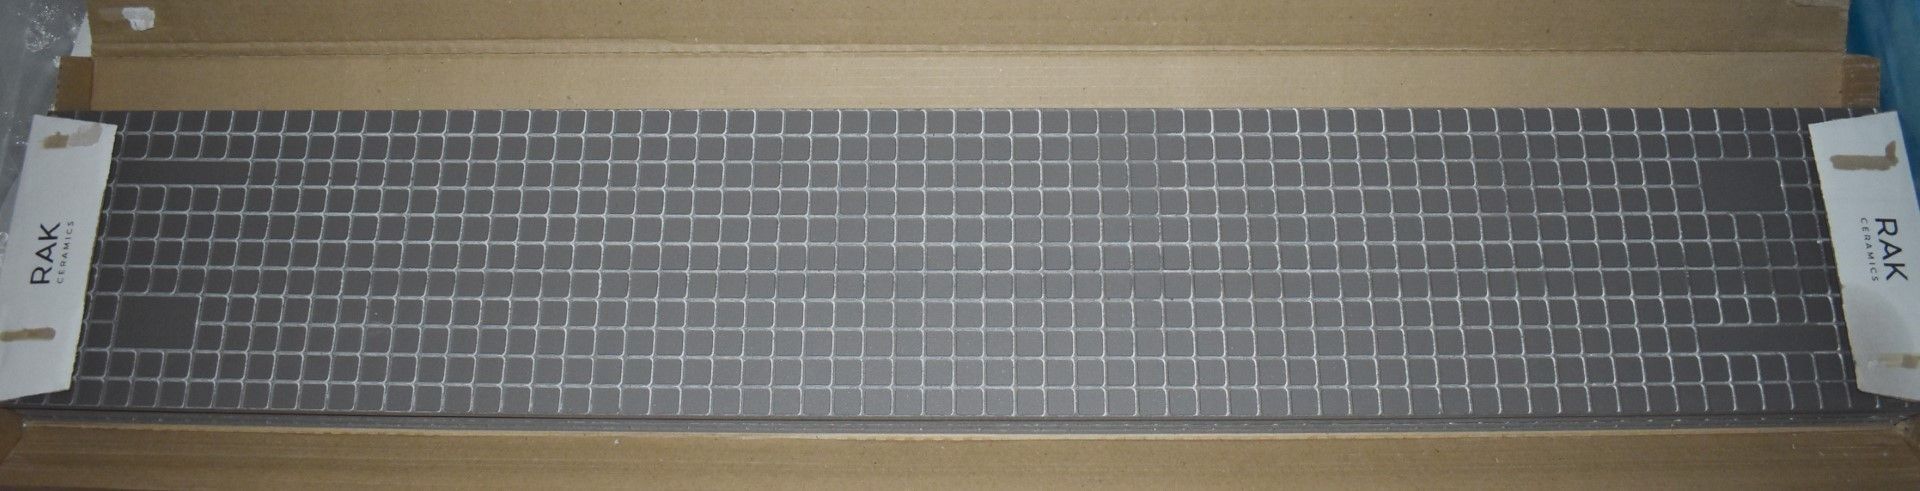 12 x Boxes of RAK Porcelain Floor or Wall Tiles - M Project Wood Design in Dark Grey - 19.5 x 120 cm - Image 4 of 11